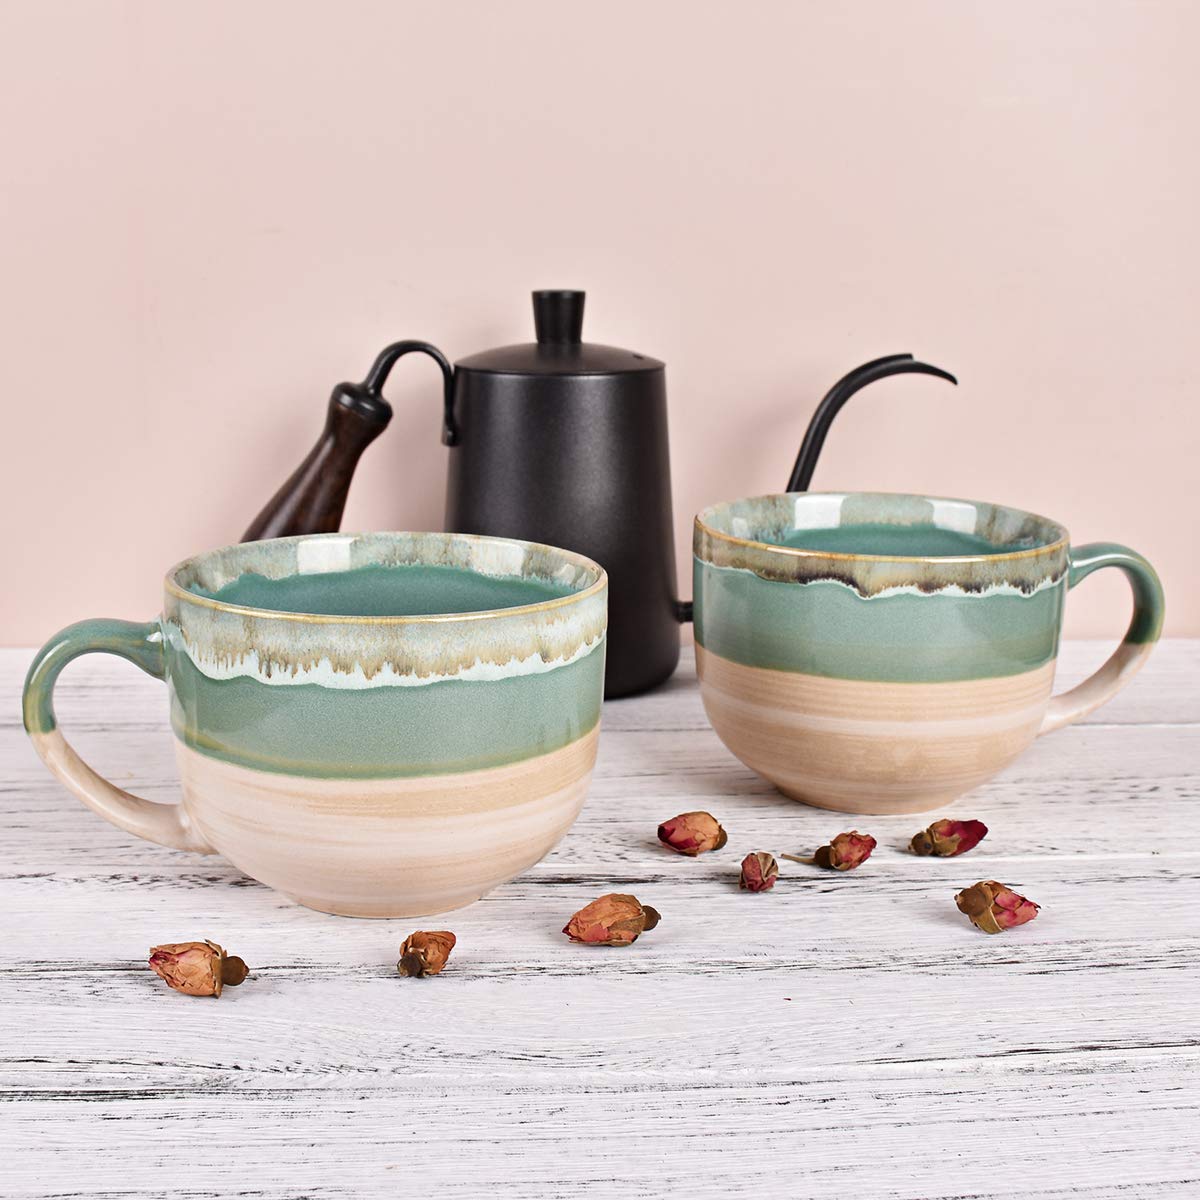 Bosmarlin Large Ceramic Coffee Mug Set of 2, Stoneware Jumbo Latte Mugs for Office and Home, 16 Oz, Dishwasher and Microwave Safe(Green, 2)